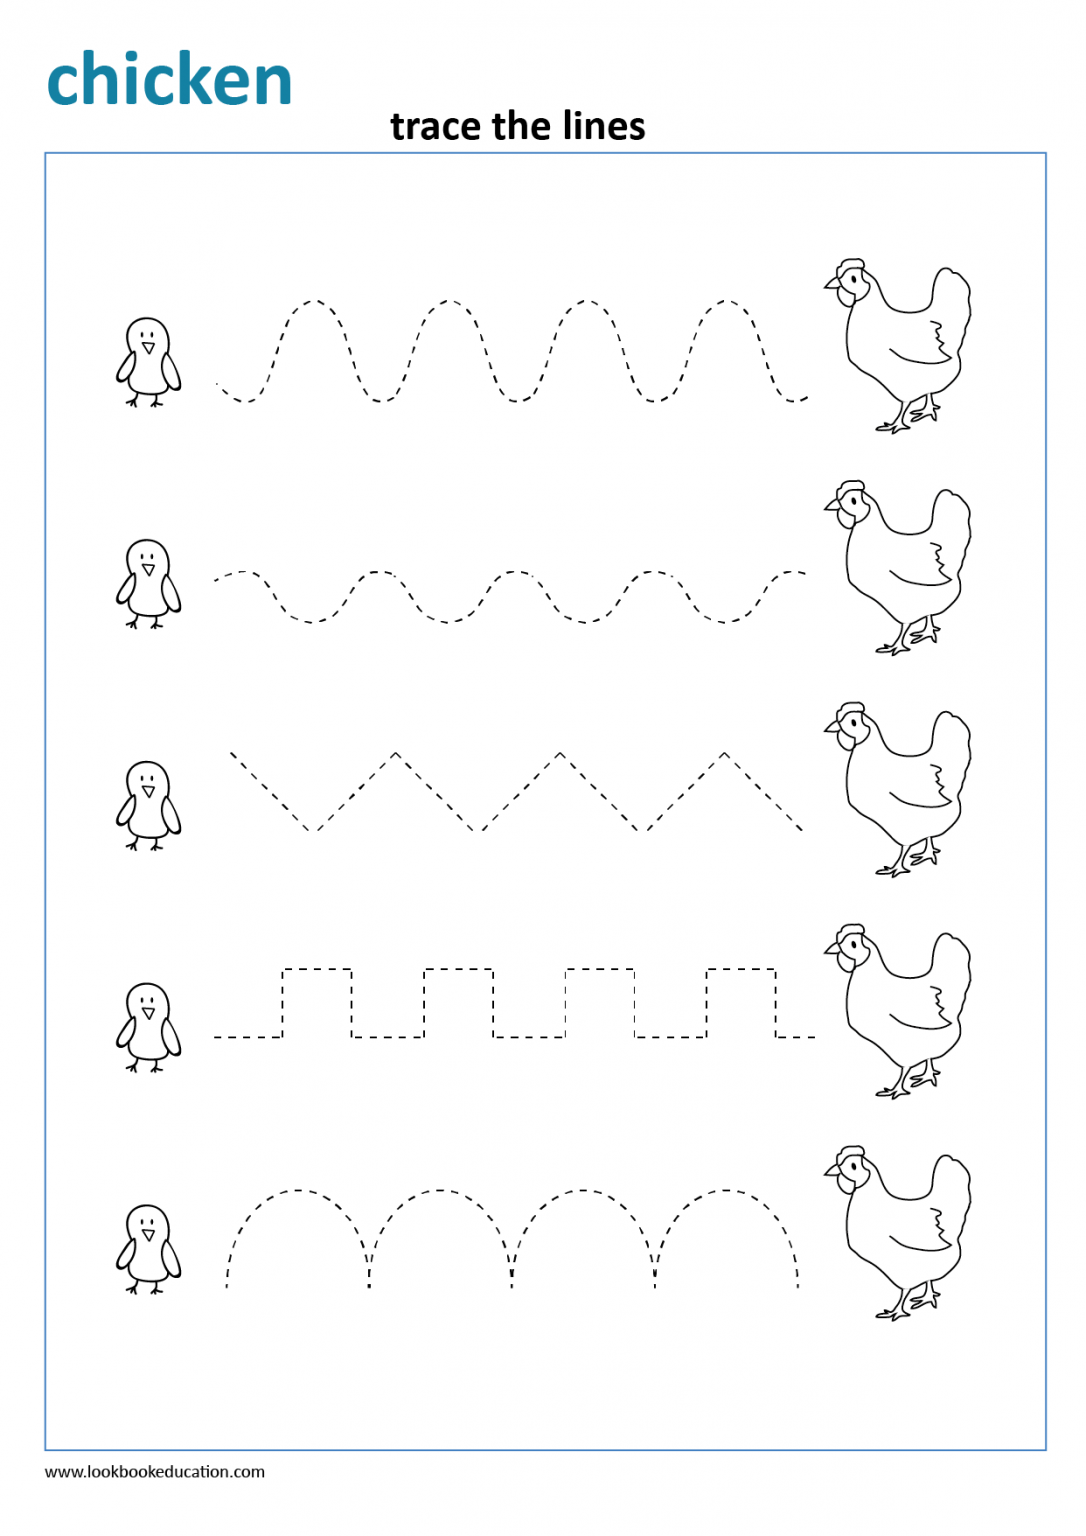 Worksheet Tracing Chicken - Lookbook Education